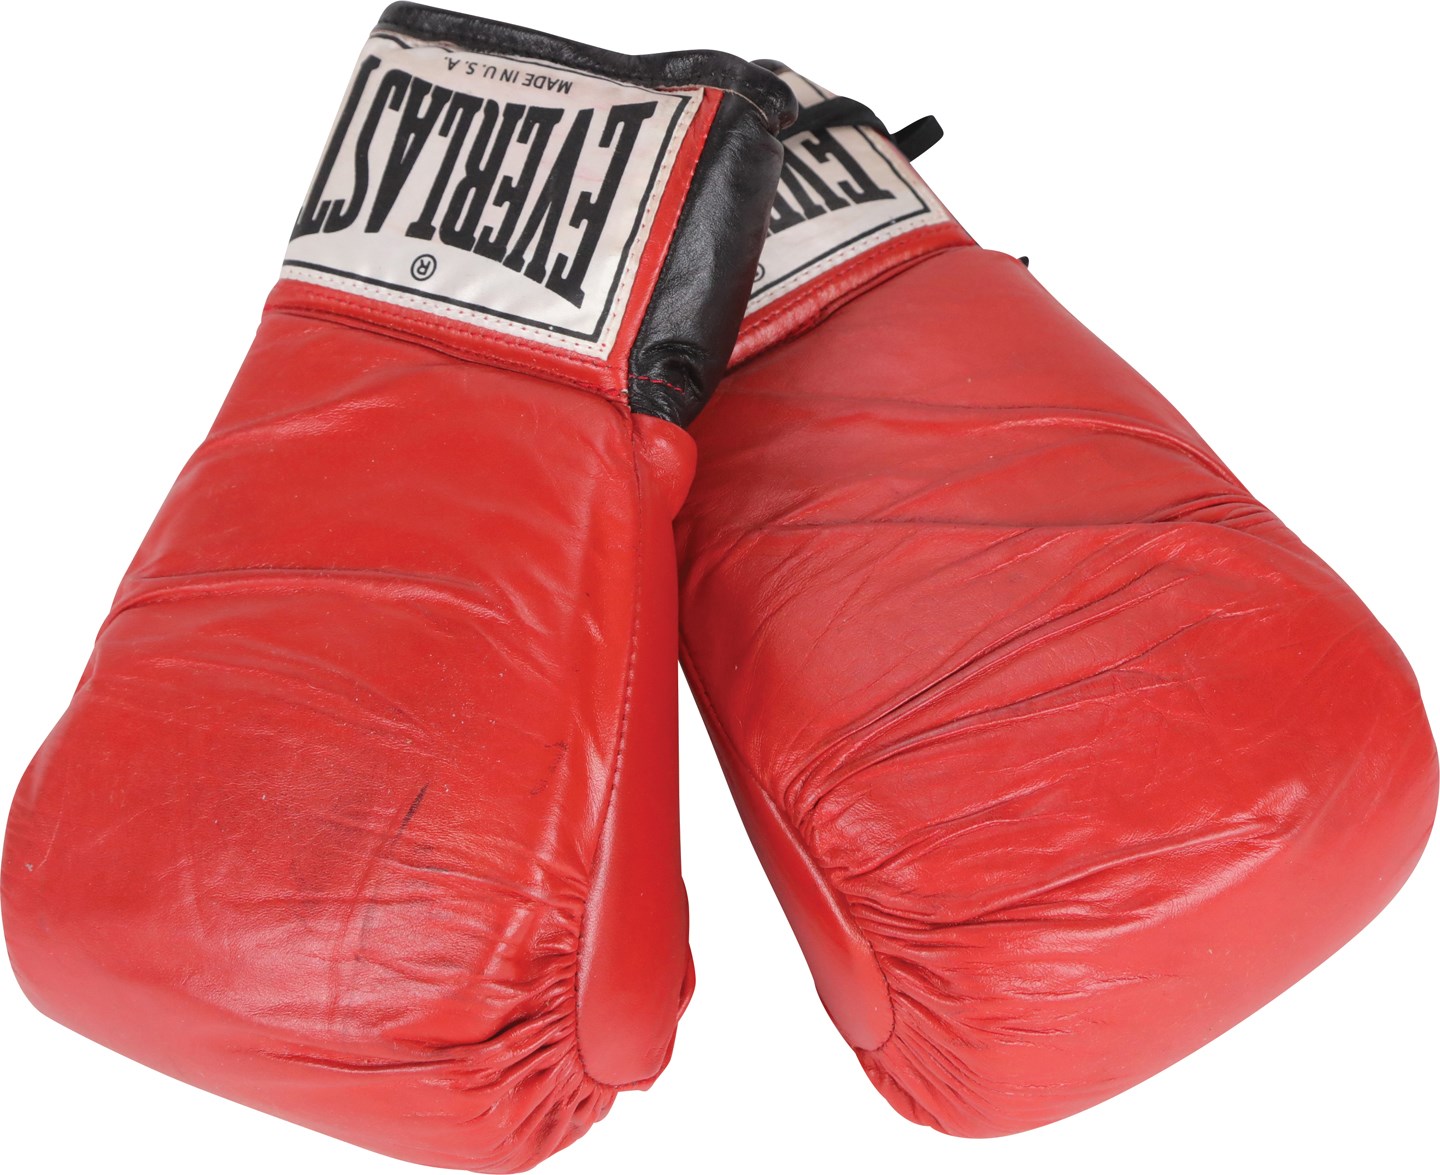 - 986 Mike Tyson Fight Worn Gloves vs. Reggie Gross (Lott & Hamilton Letters)